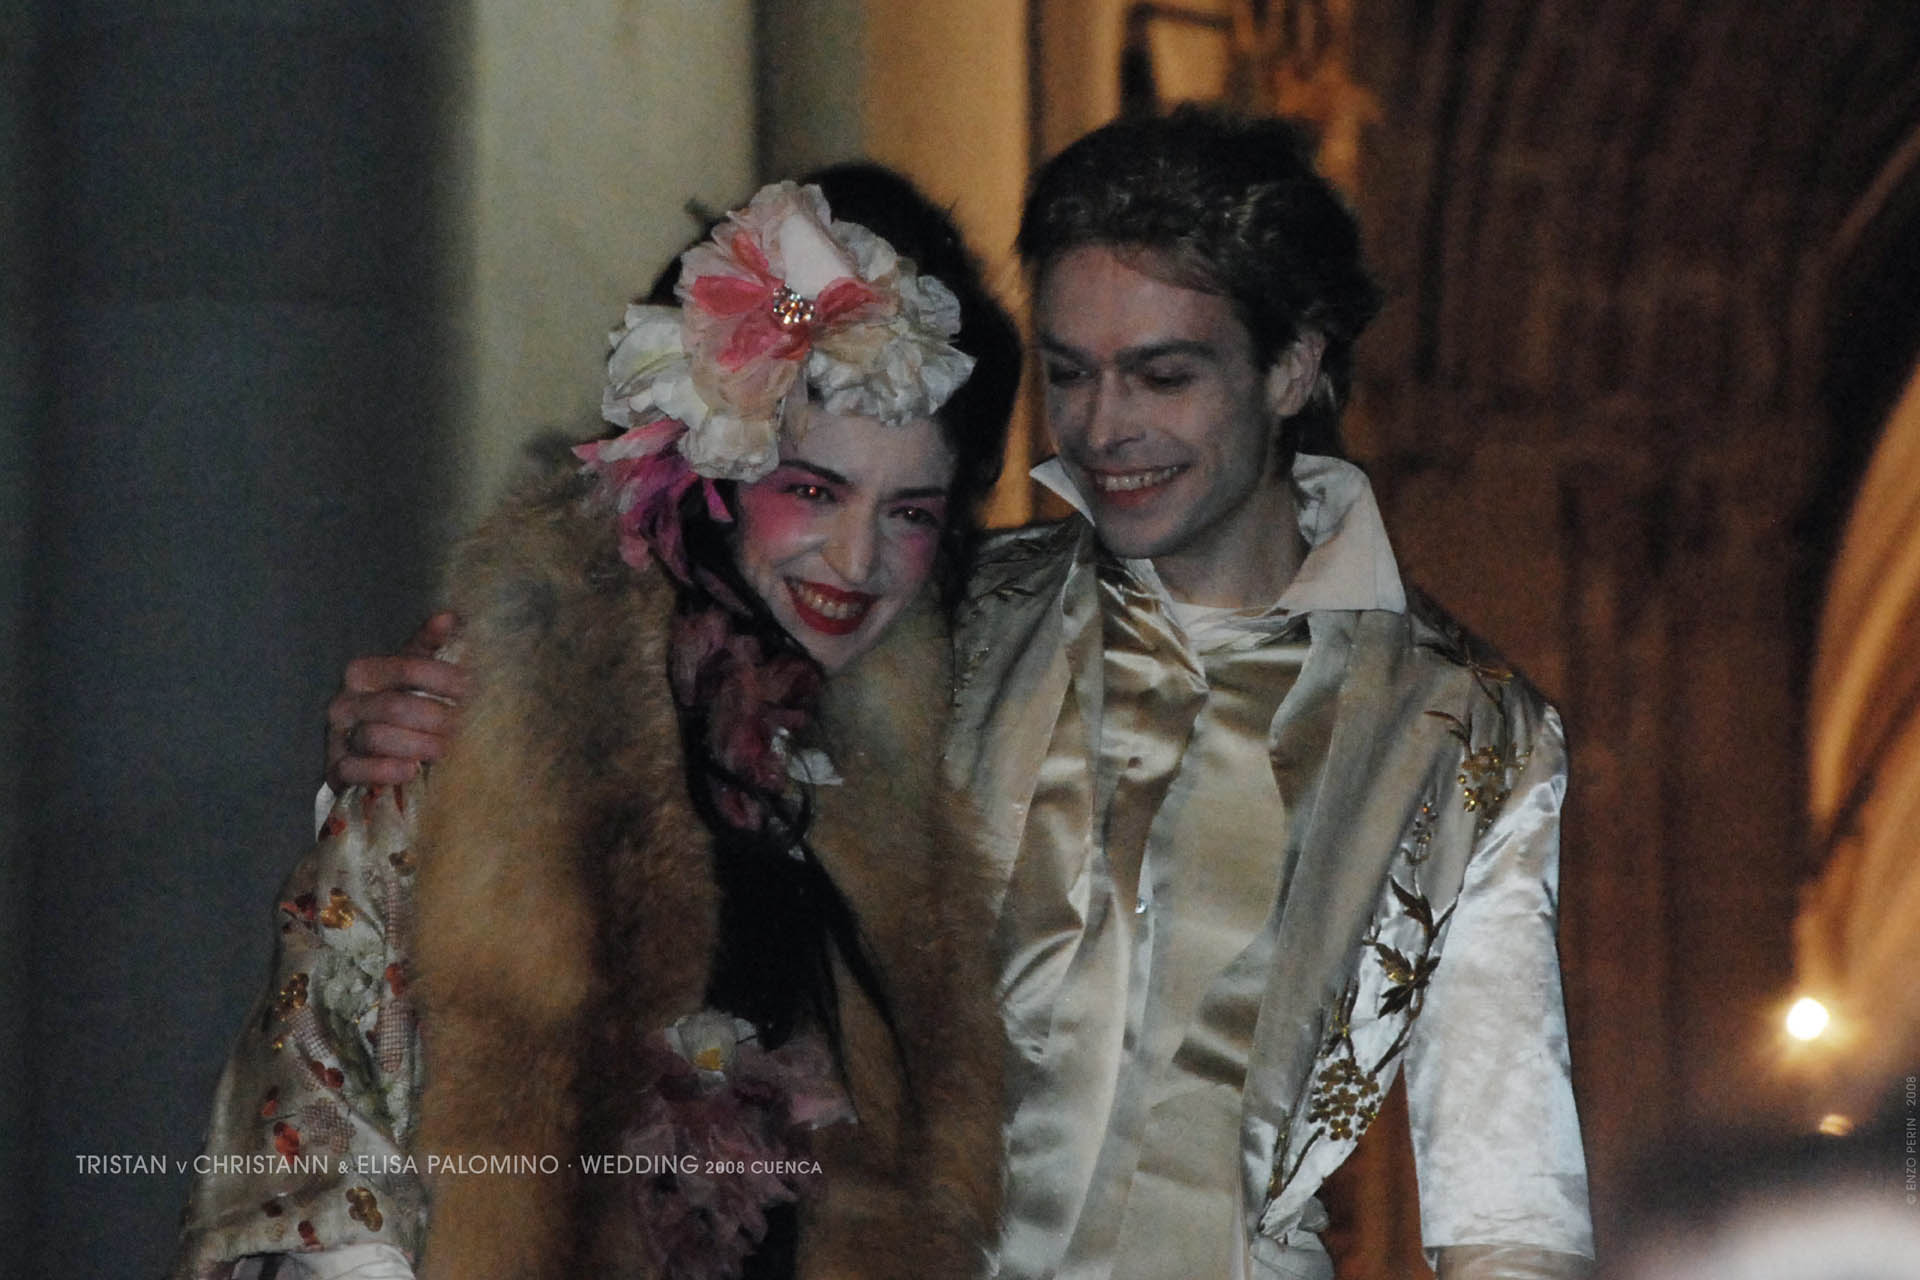 Wedding Elisa Palomino + Tristan v Christann, Cuenca 2008